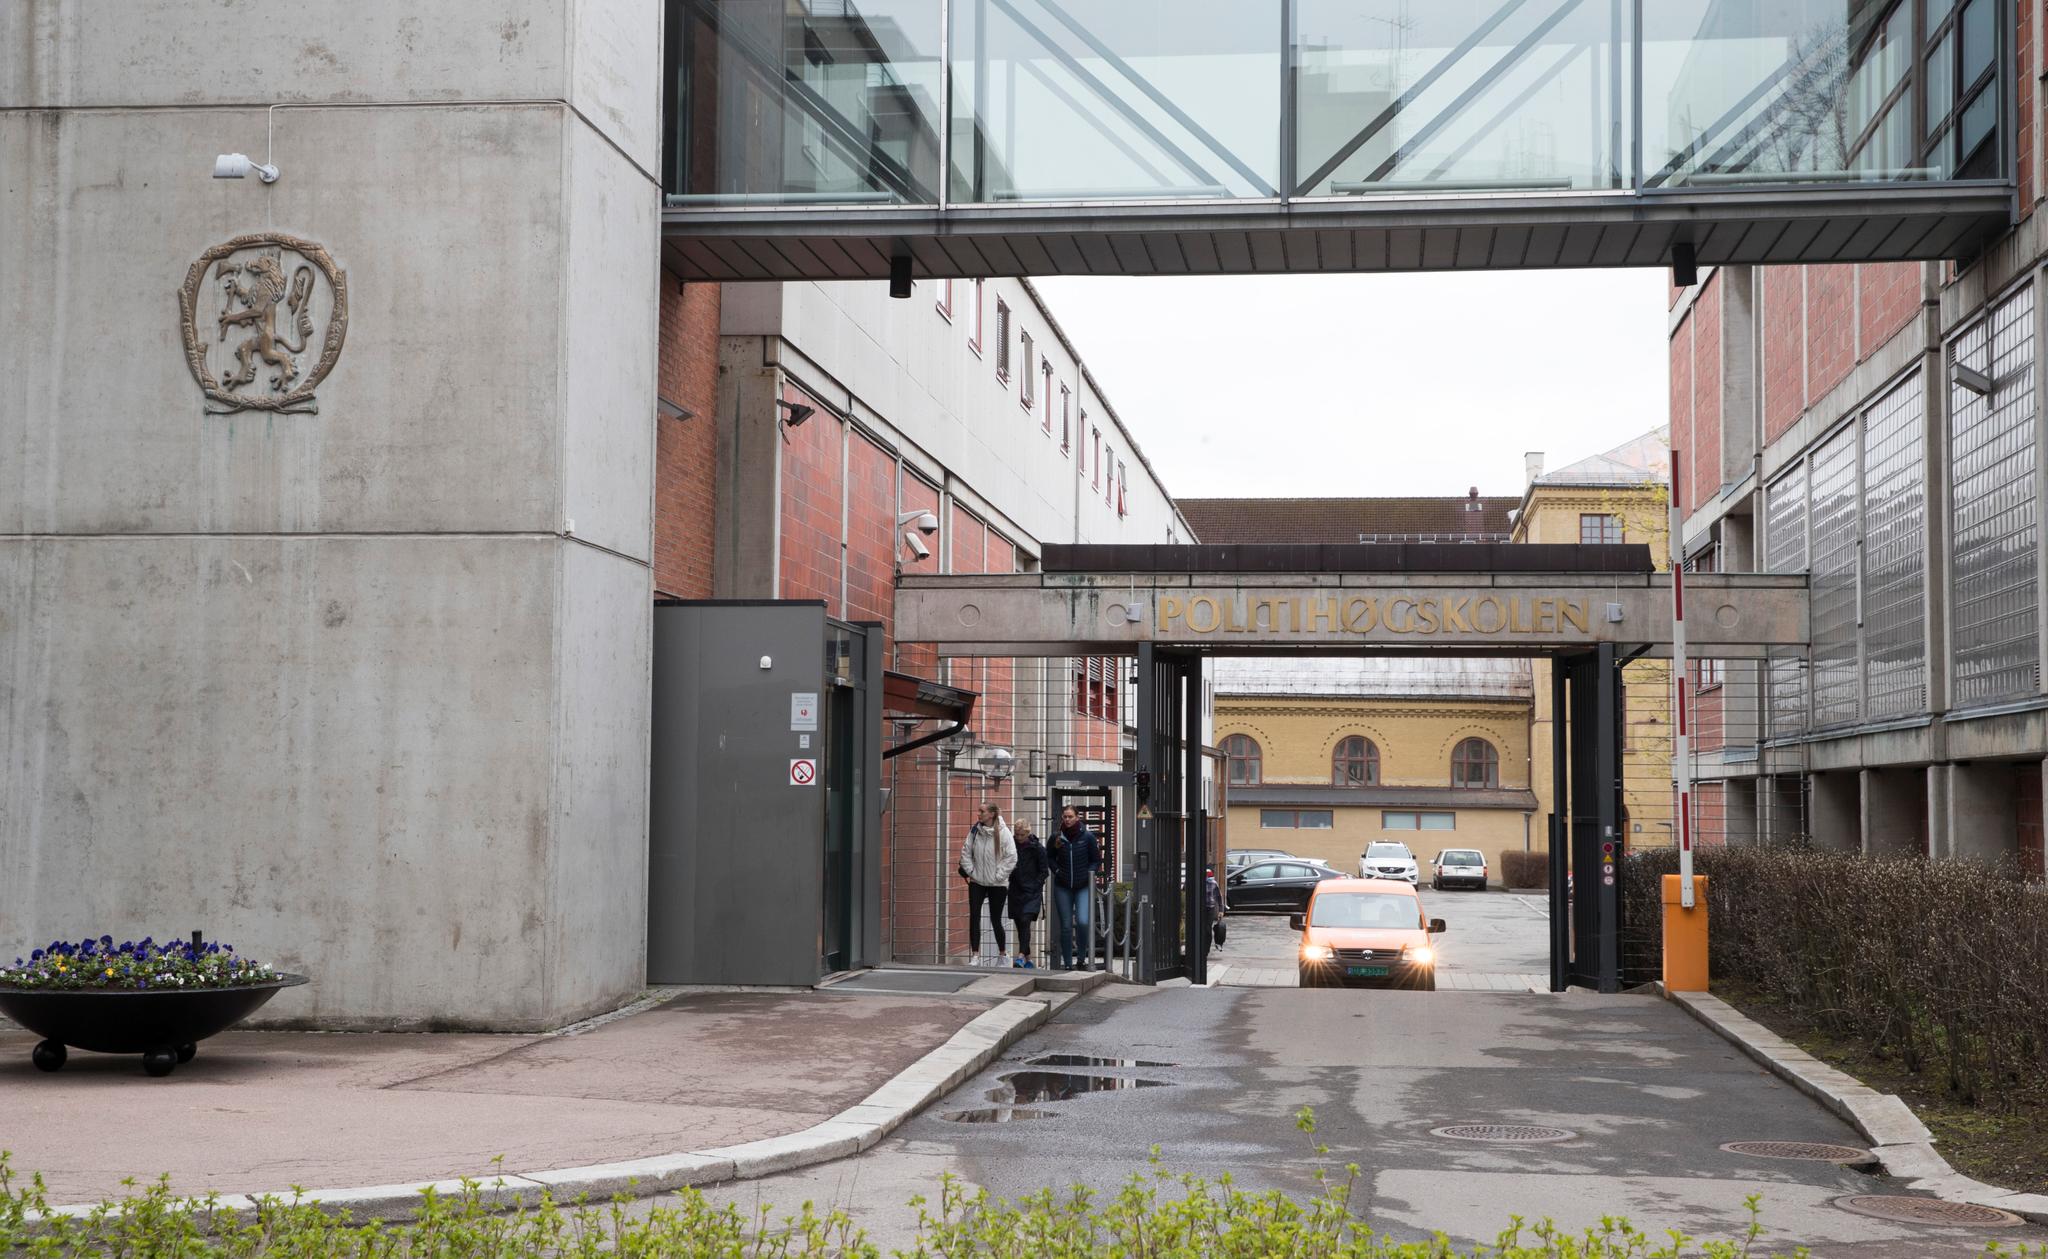 Politihøgskolen i Oslo er en statlig høyskole med ansvar for politiutdanningen i Norge. 